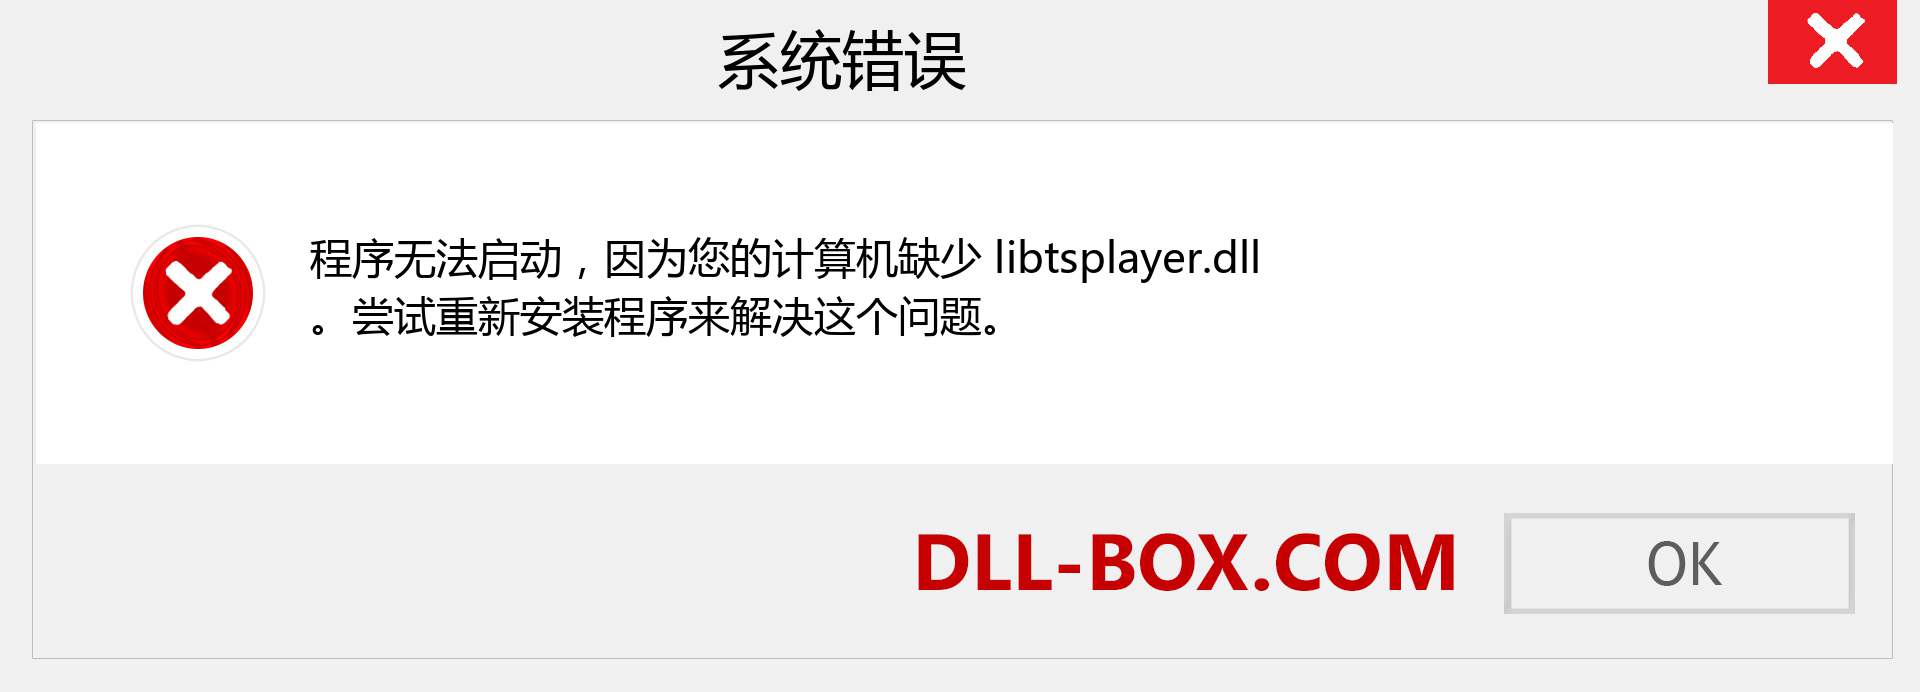 libtsplayer.dll 文件丢失？。 适用于 Windows 7、8、10 的下载 - 修复 Windows、照片、图像上的 libtsplayer dll 丢失错误